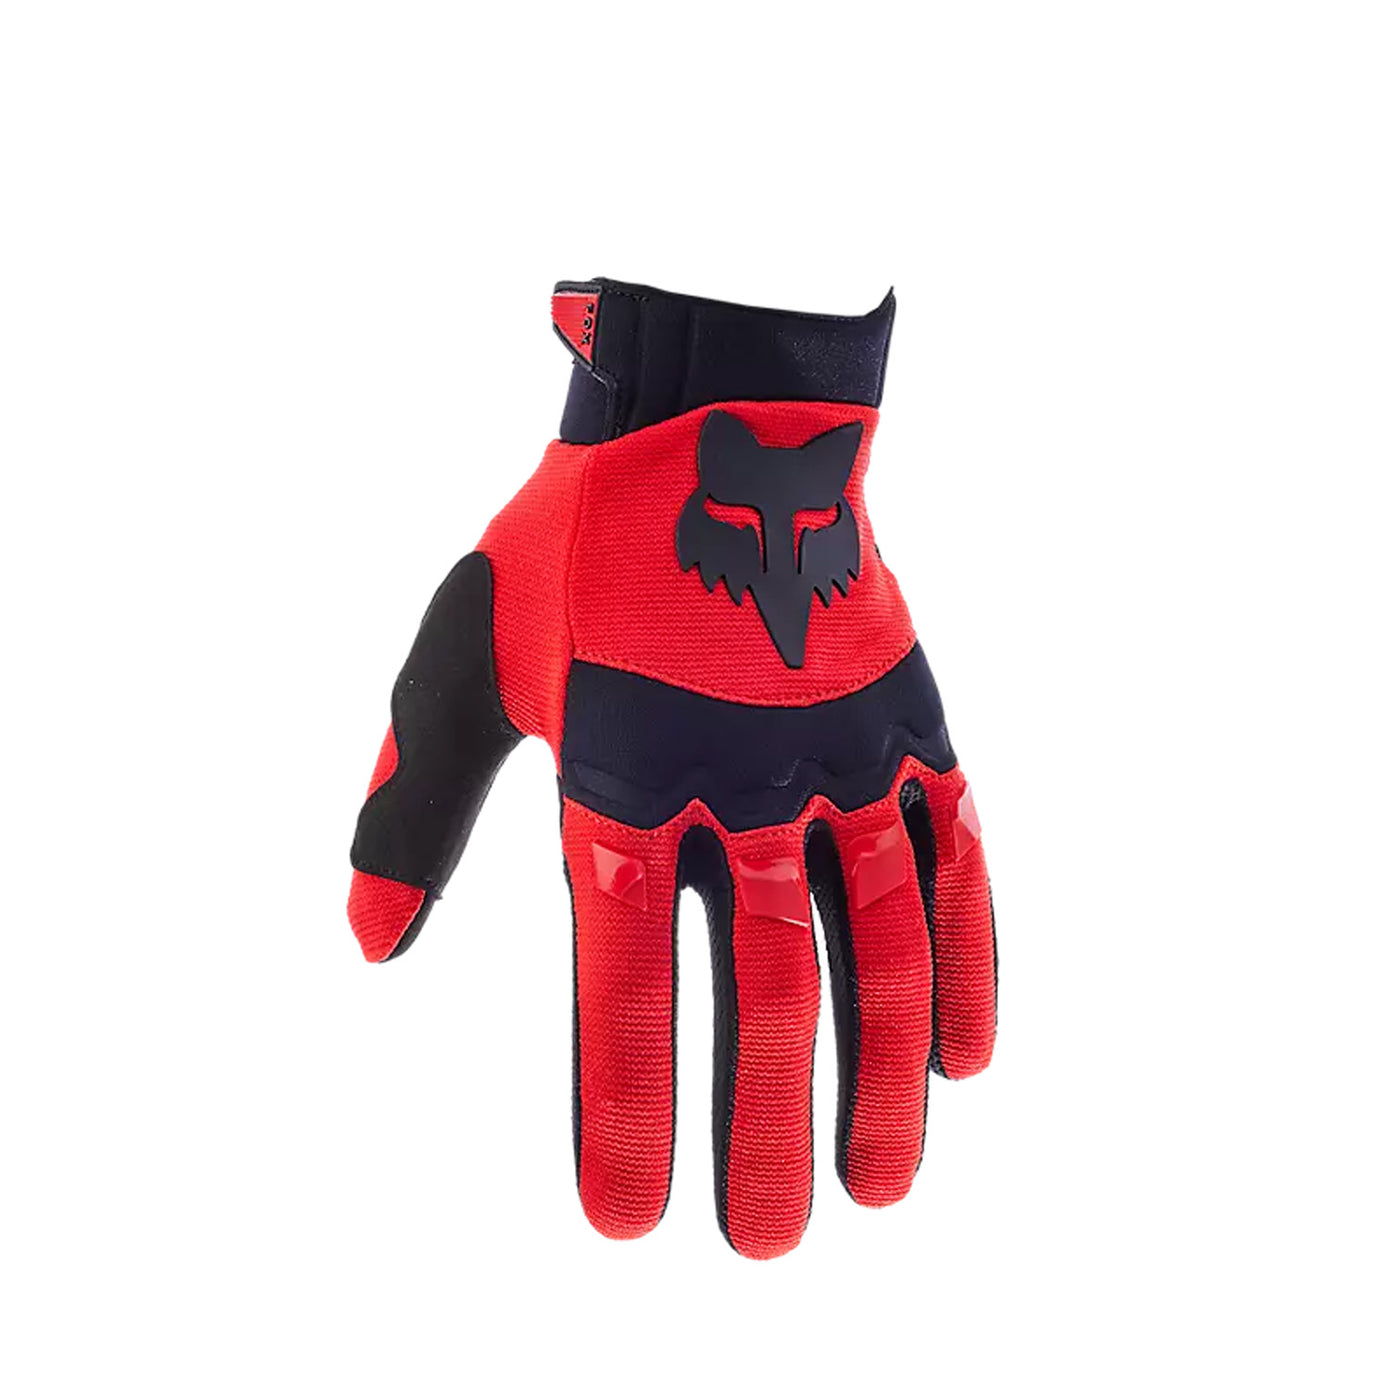 Fox Racing Dirtpaw Glove